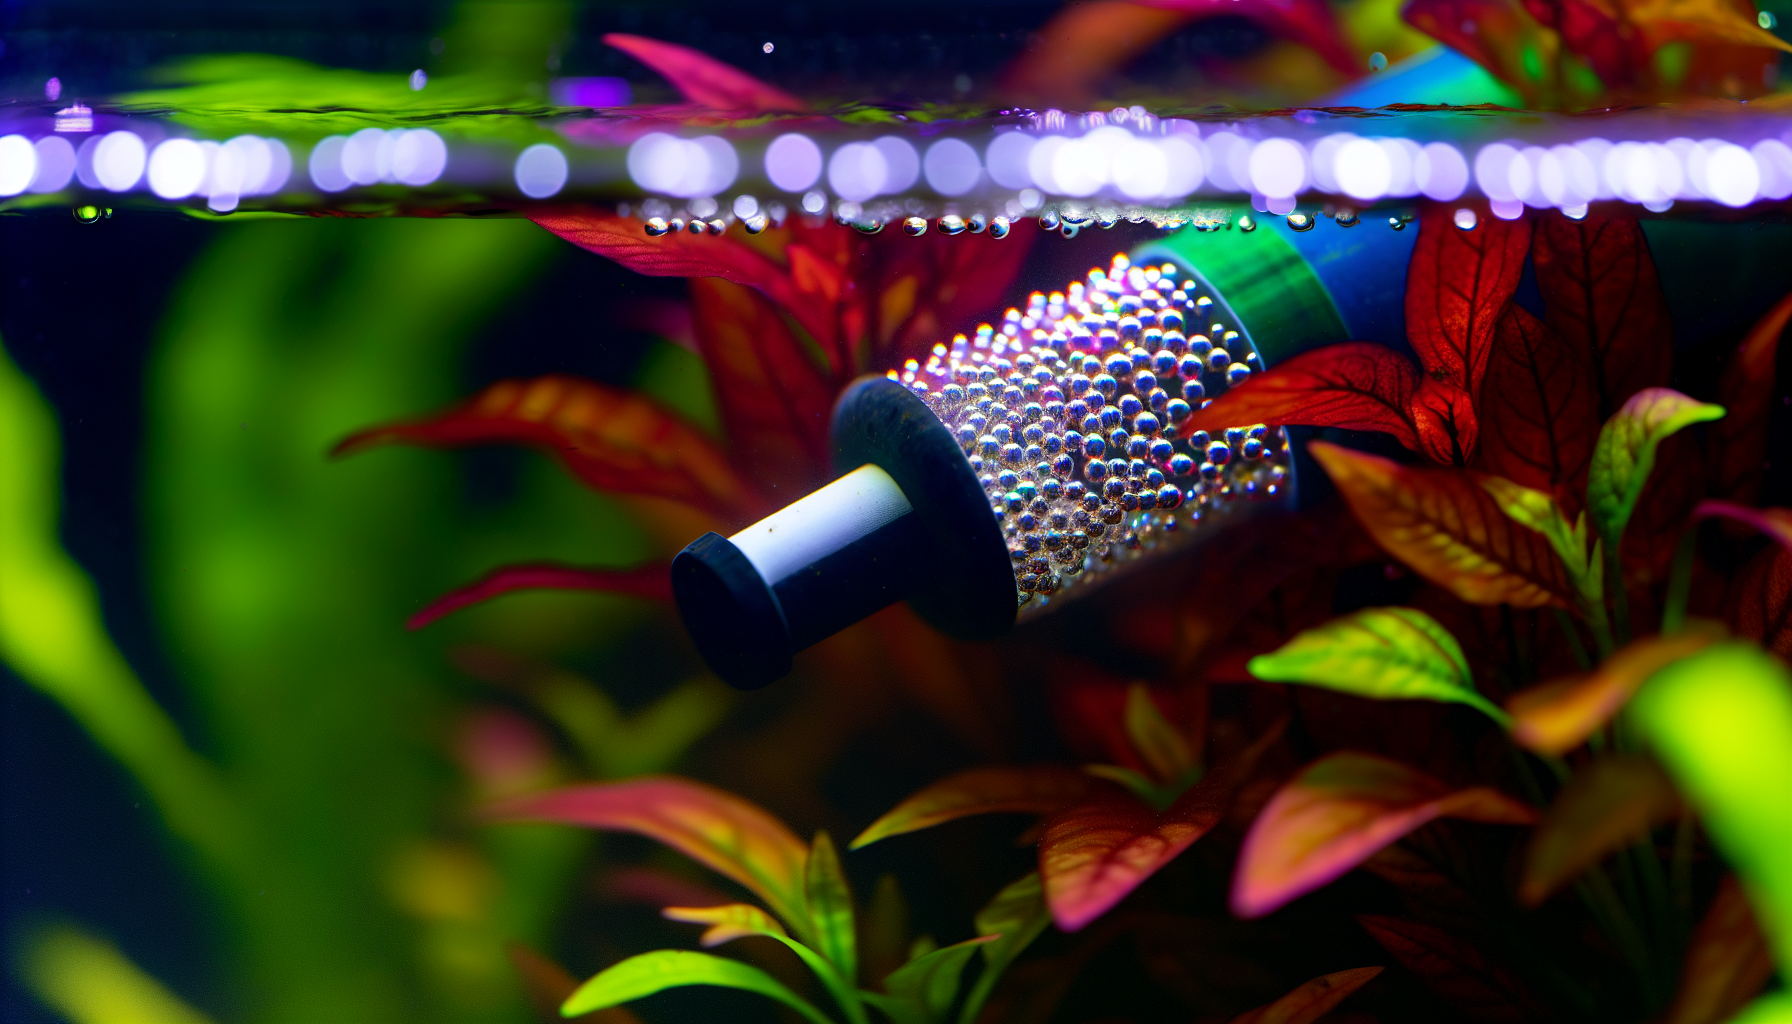 CO2 diffuser releasing bubbles in a planted aquarium